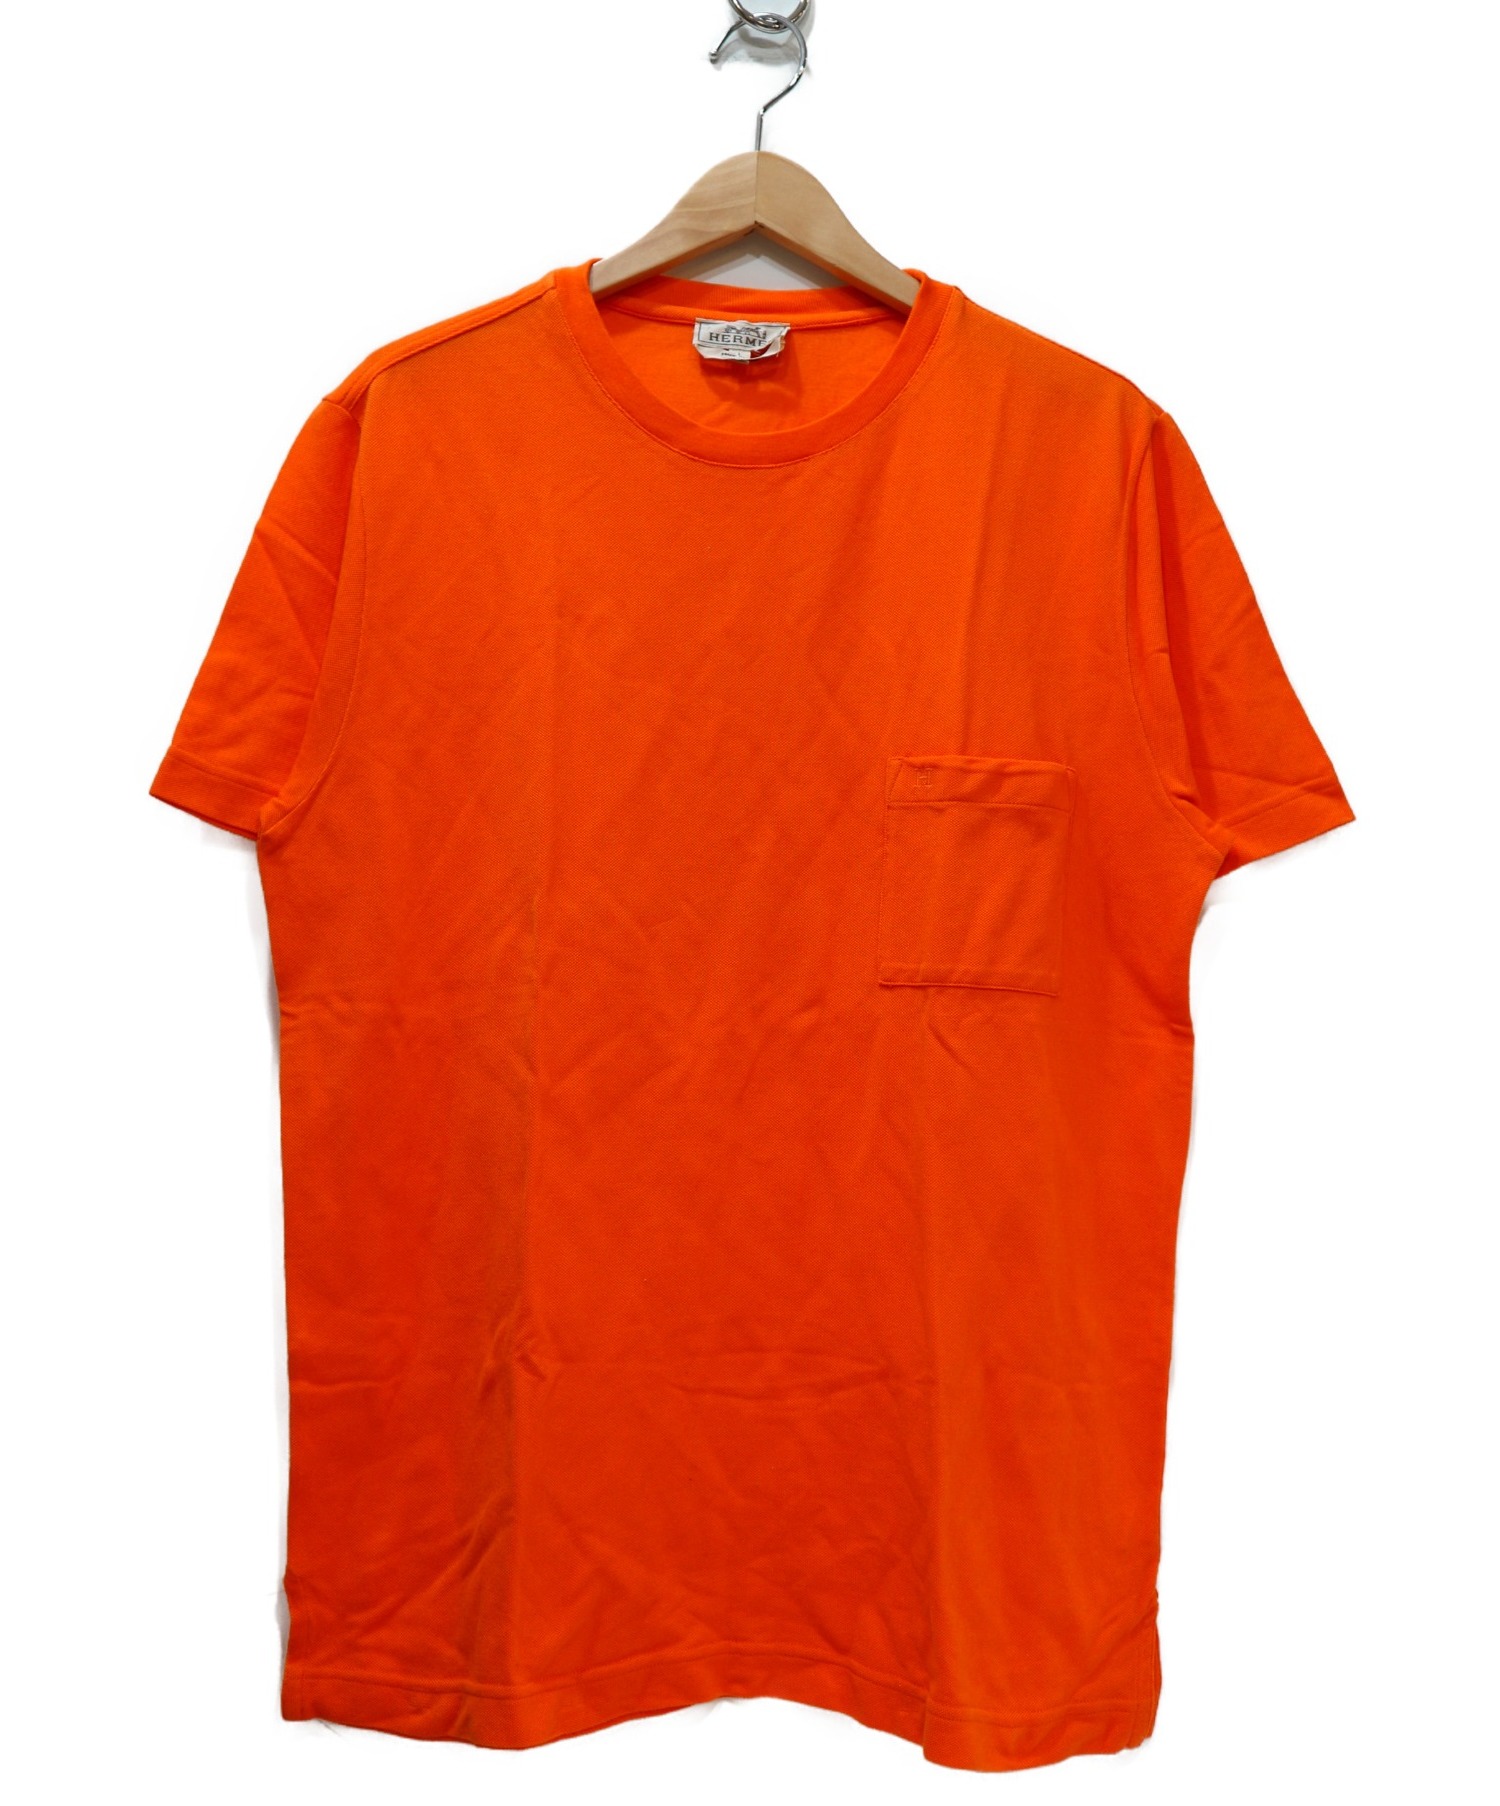 HERMES (エルメス) Hロゴ刺繍ポケットTシャツ オレンジ サイズ:L 並行品